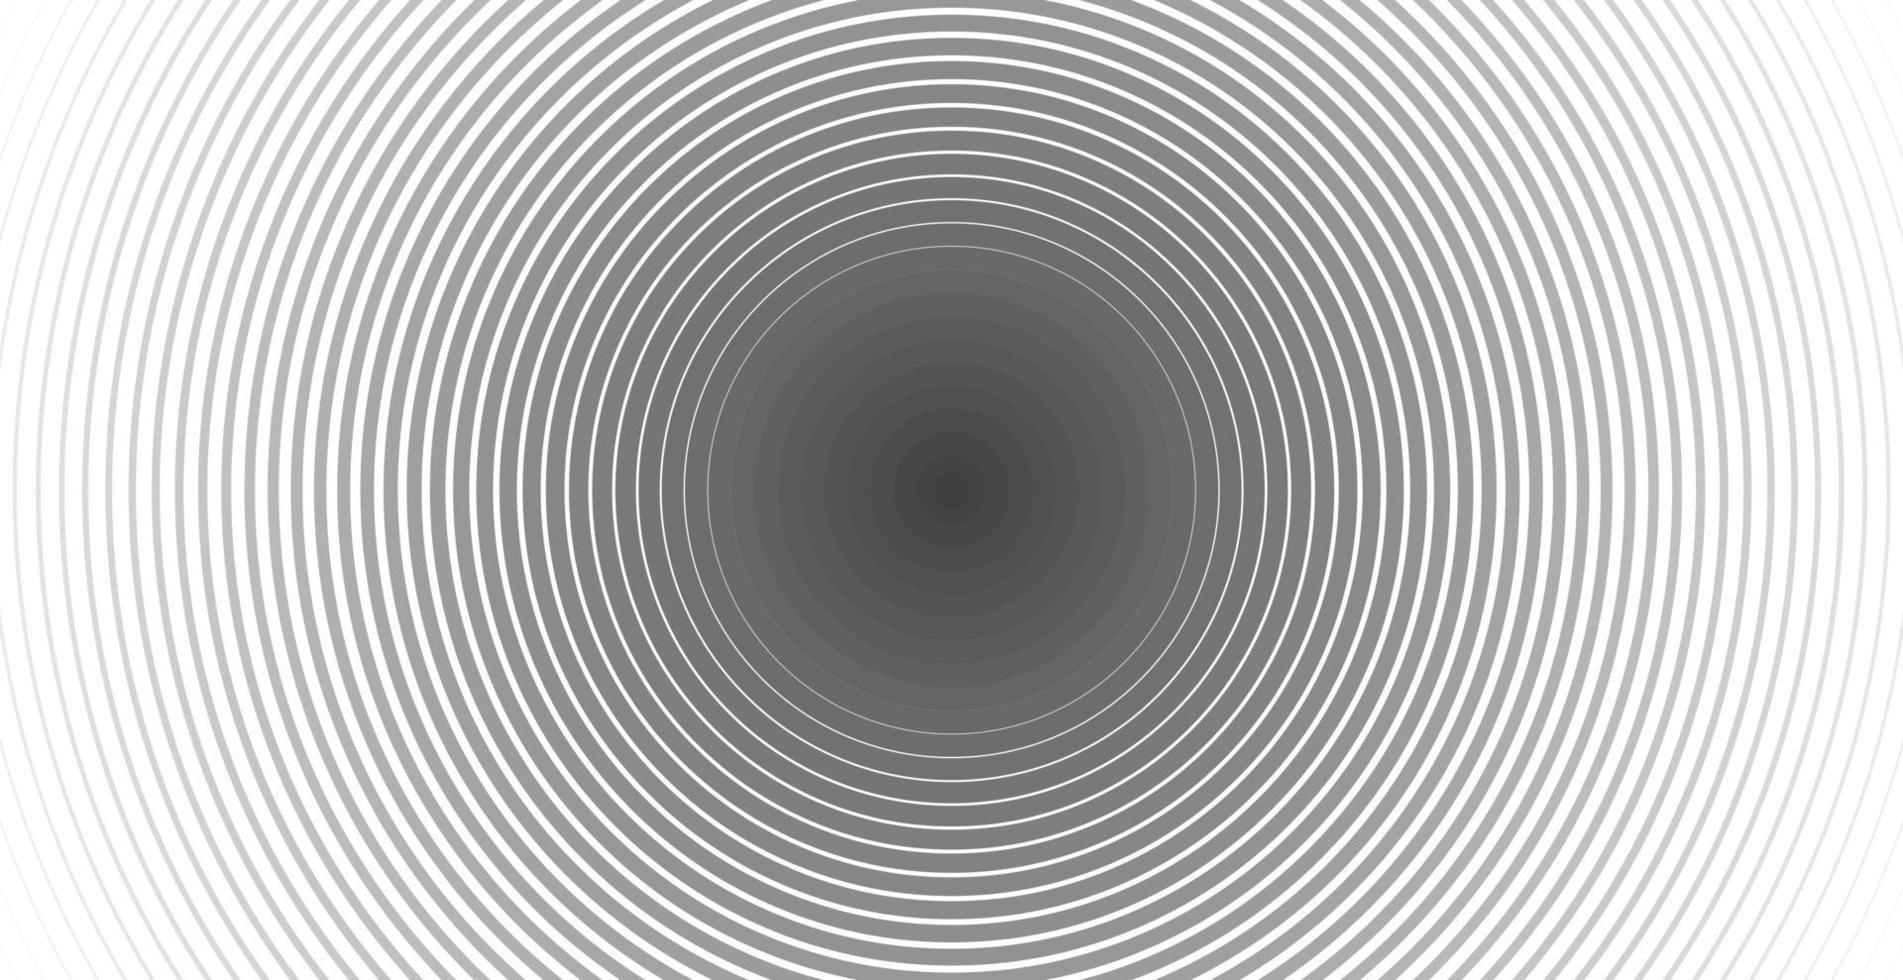 gráficos de onda sonora de fundo de linha de círculo vetor